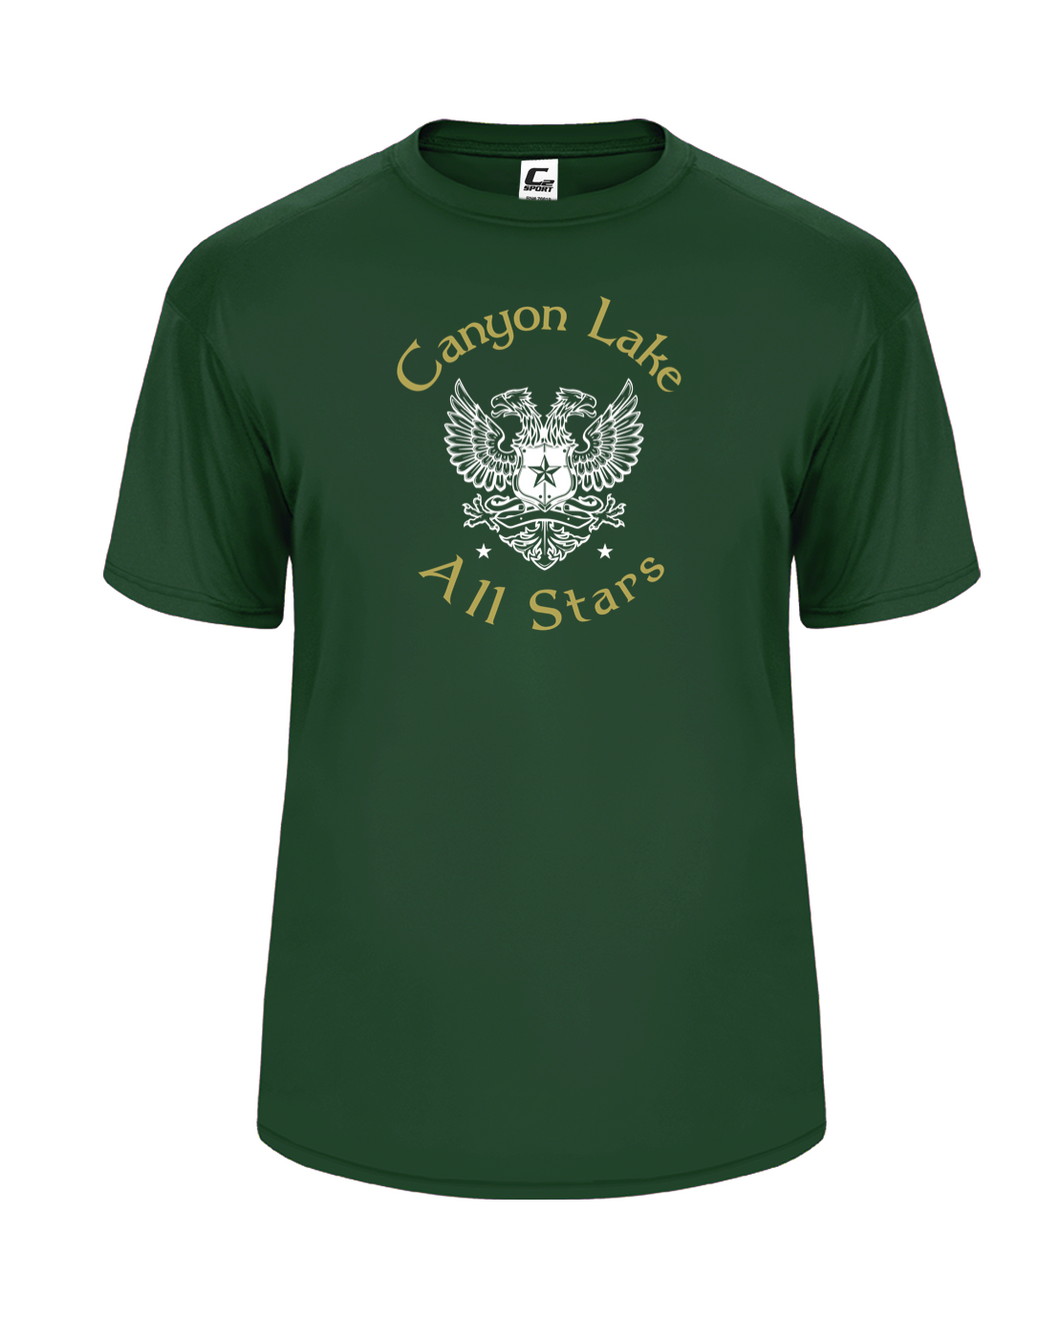 Canyon Lake All Star DRI-FIT Shirt